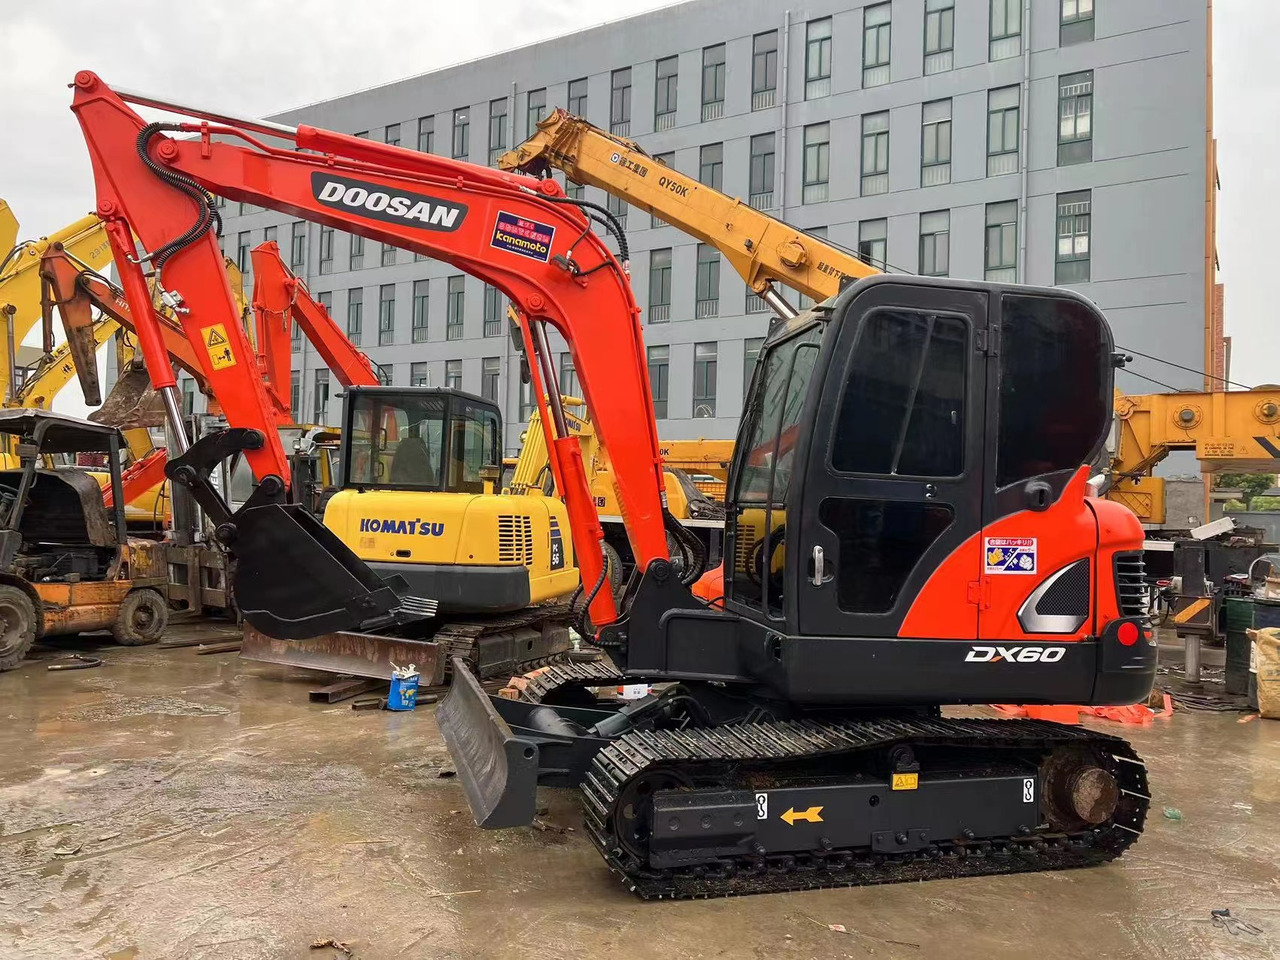 Crawler excavator DOOSAN used excavator DX60 good condition in ready stock on sale: picture 4